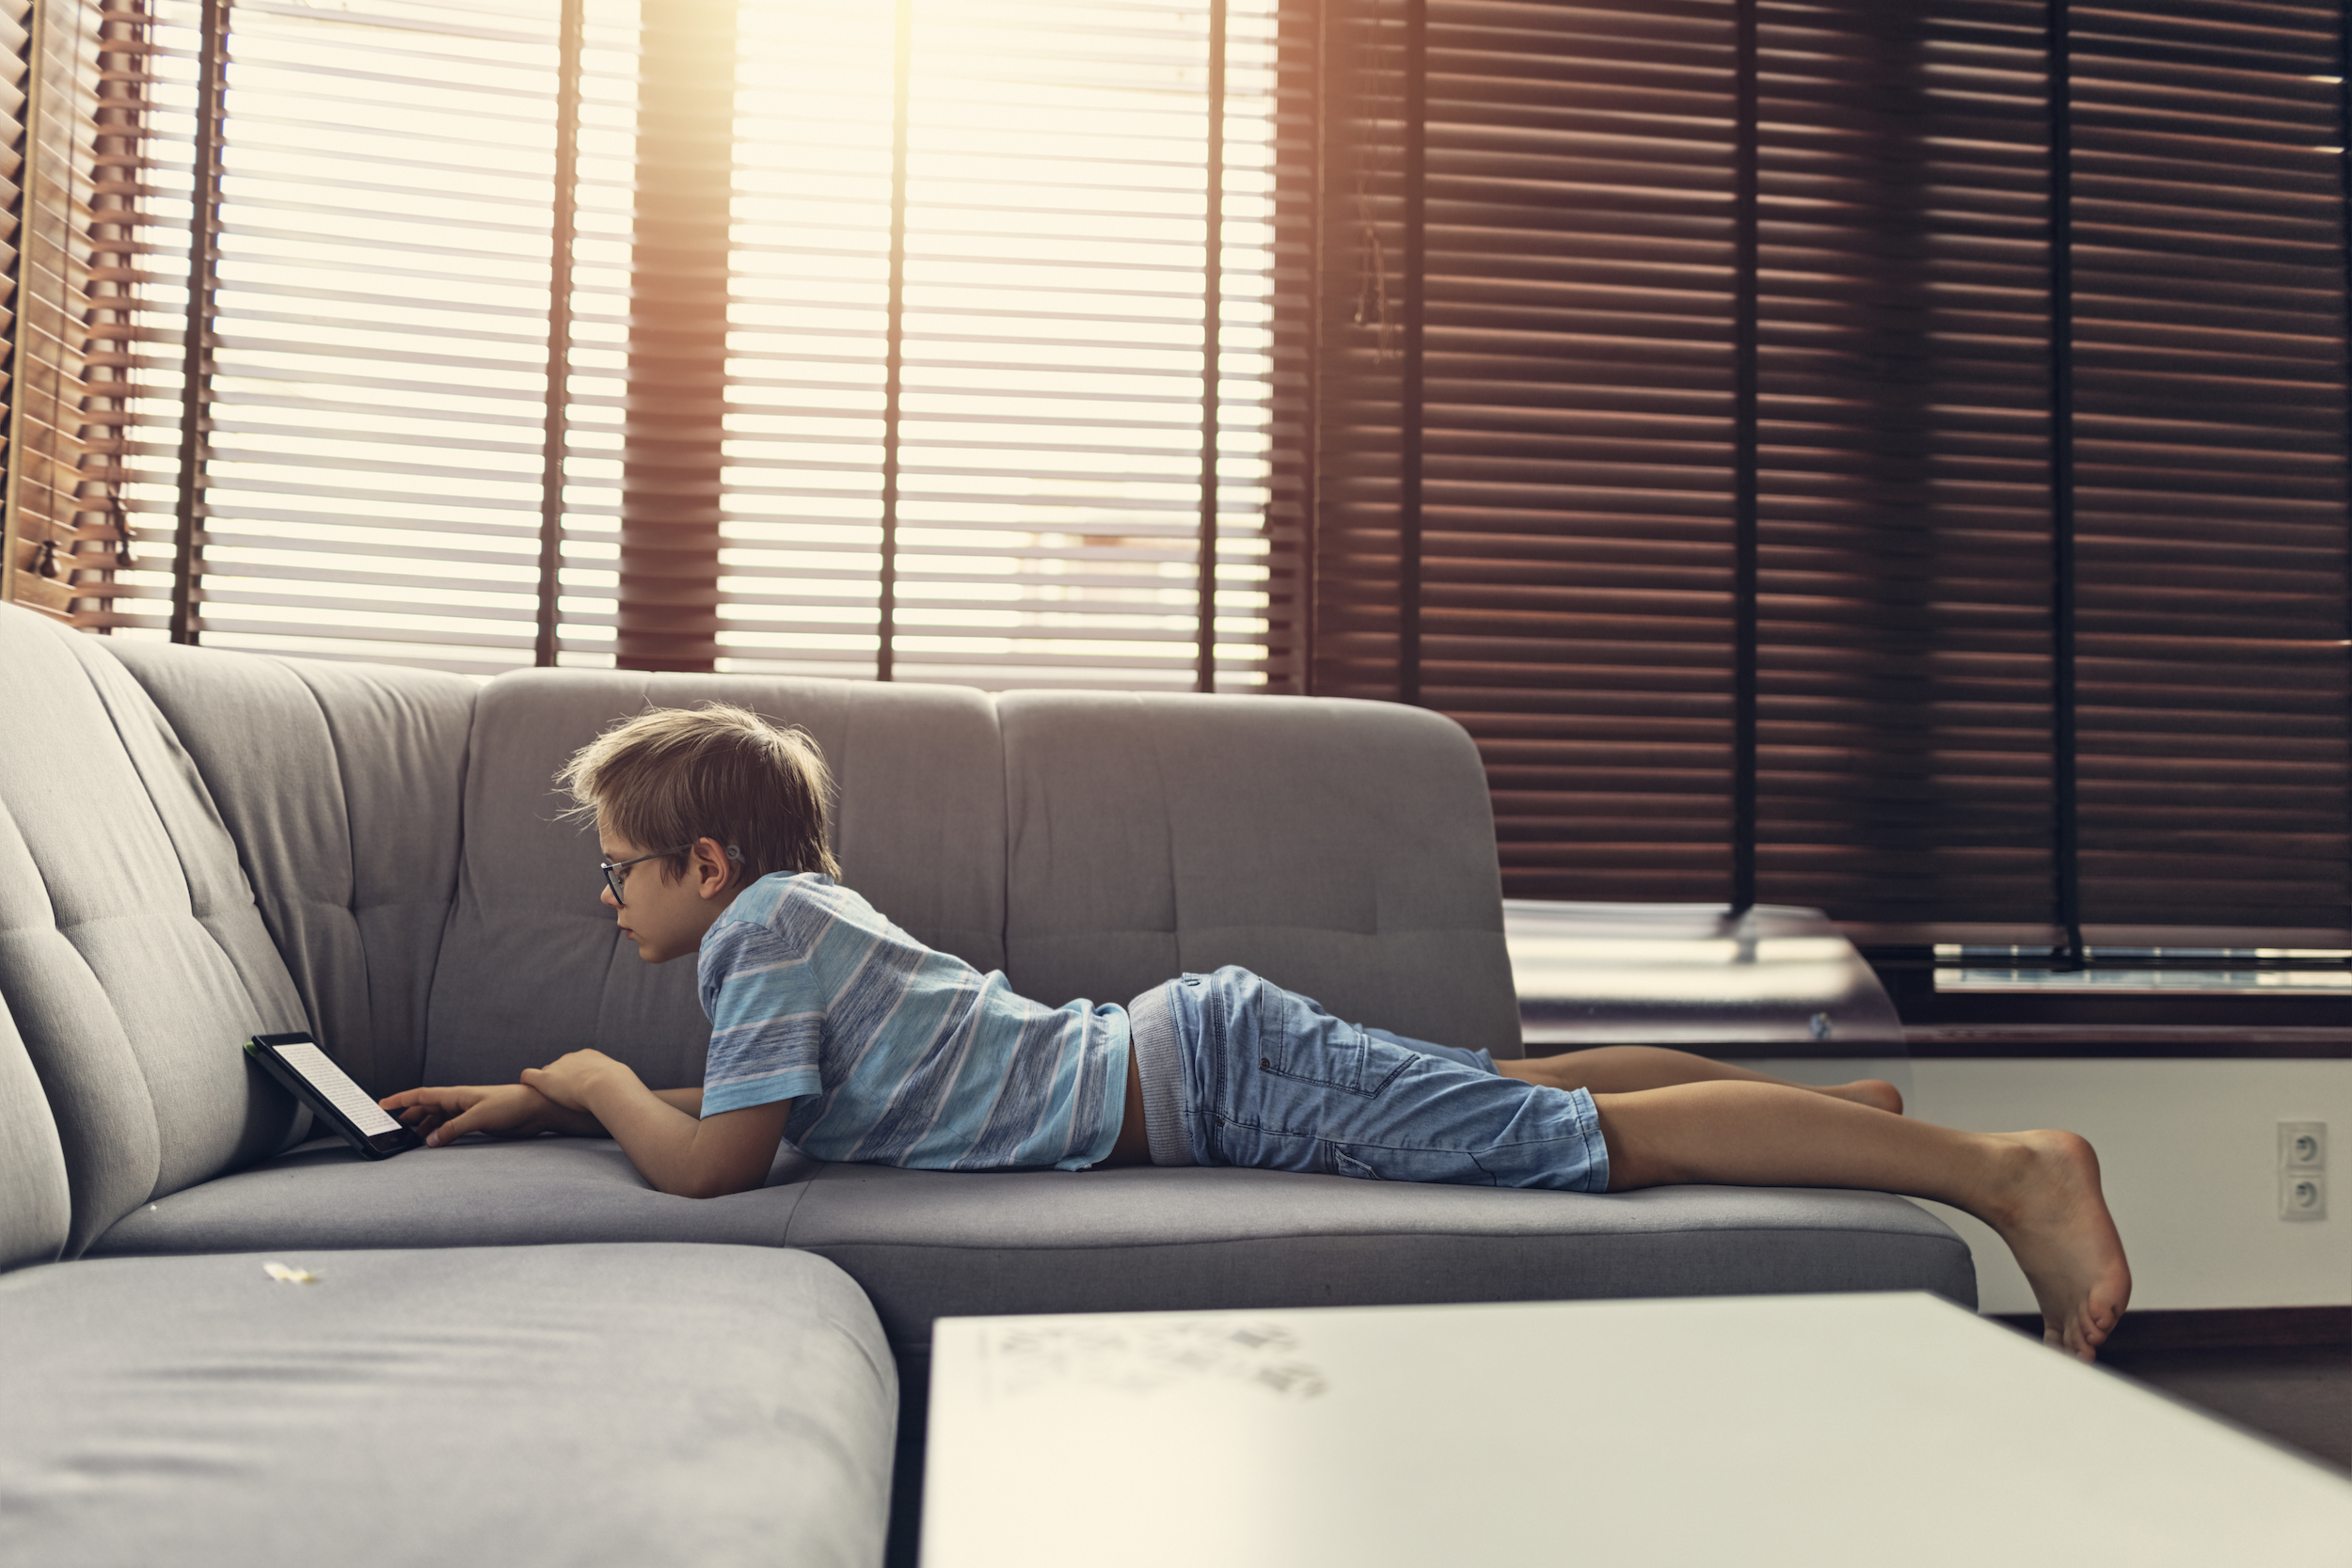 boy reading e-reader under blinds